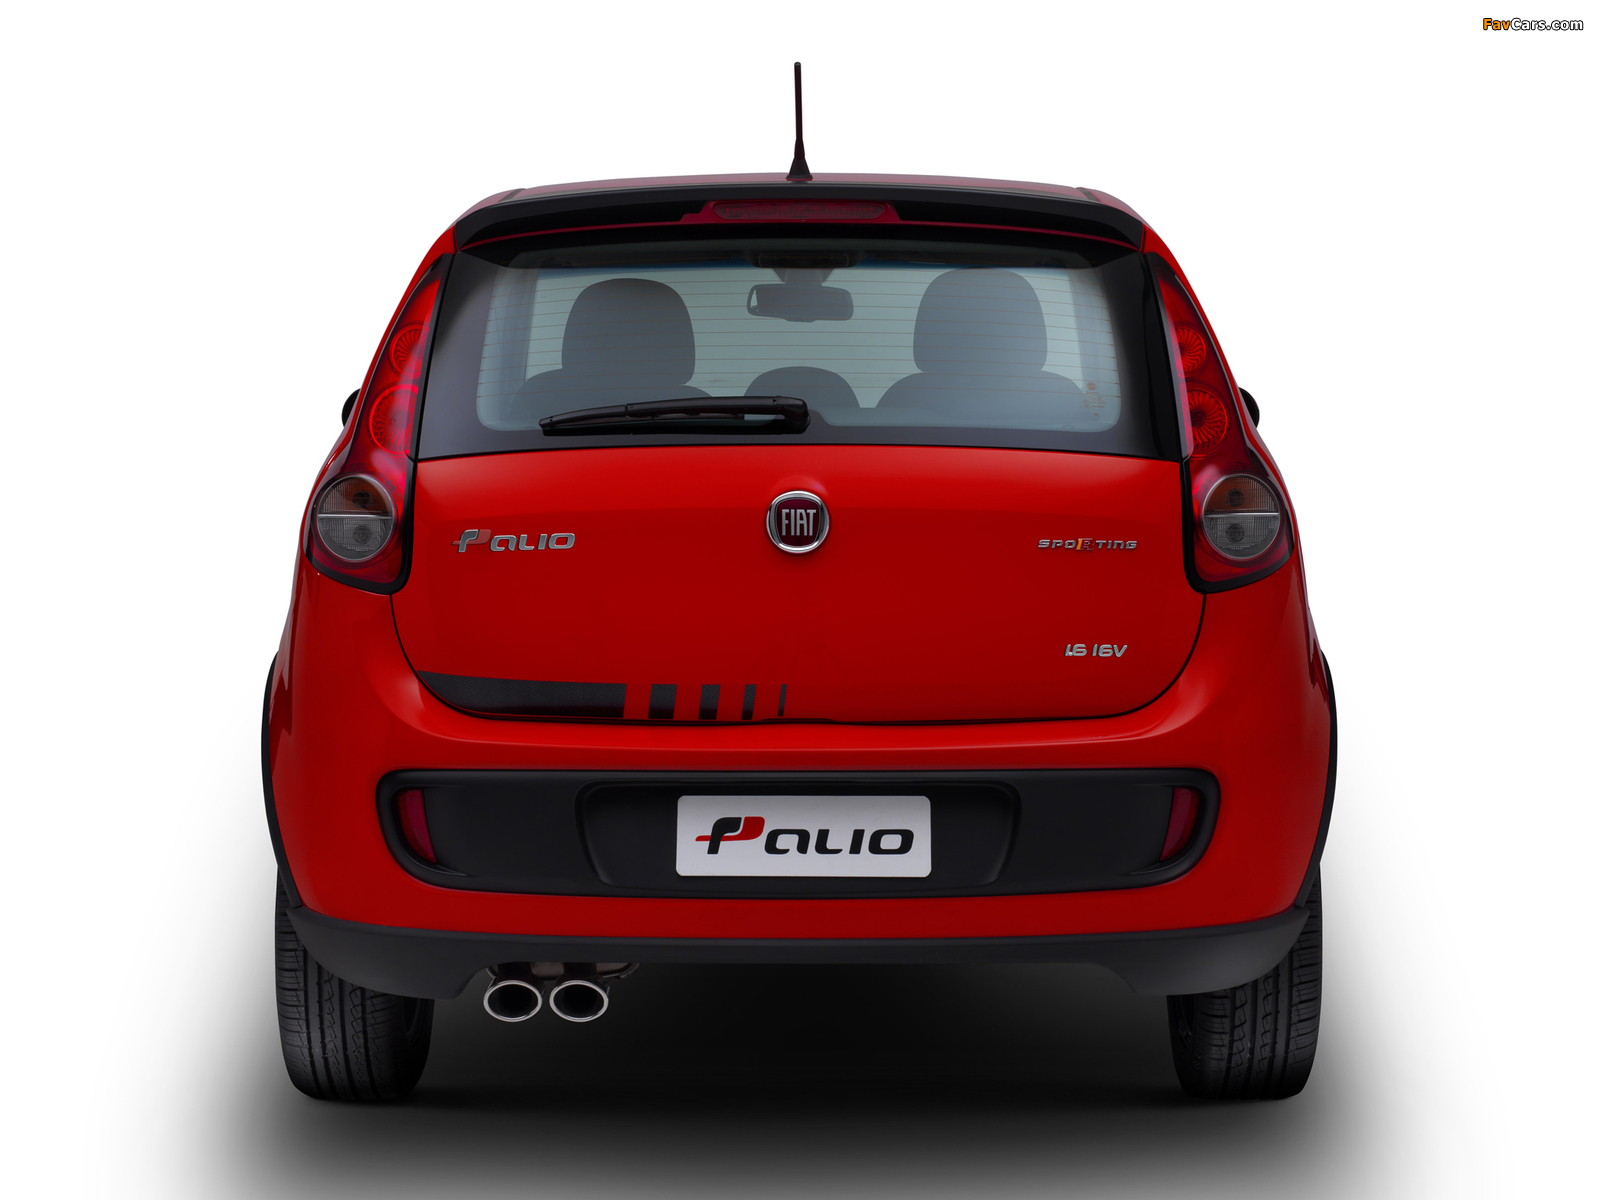 Fiat Palio Sporting (326) 2011 photos (1600 x 1200)